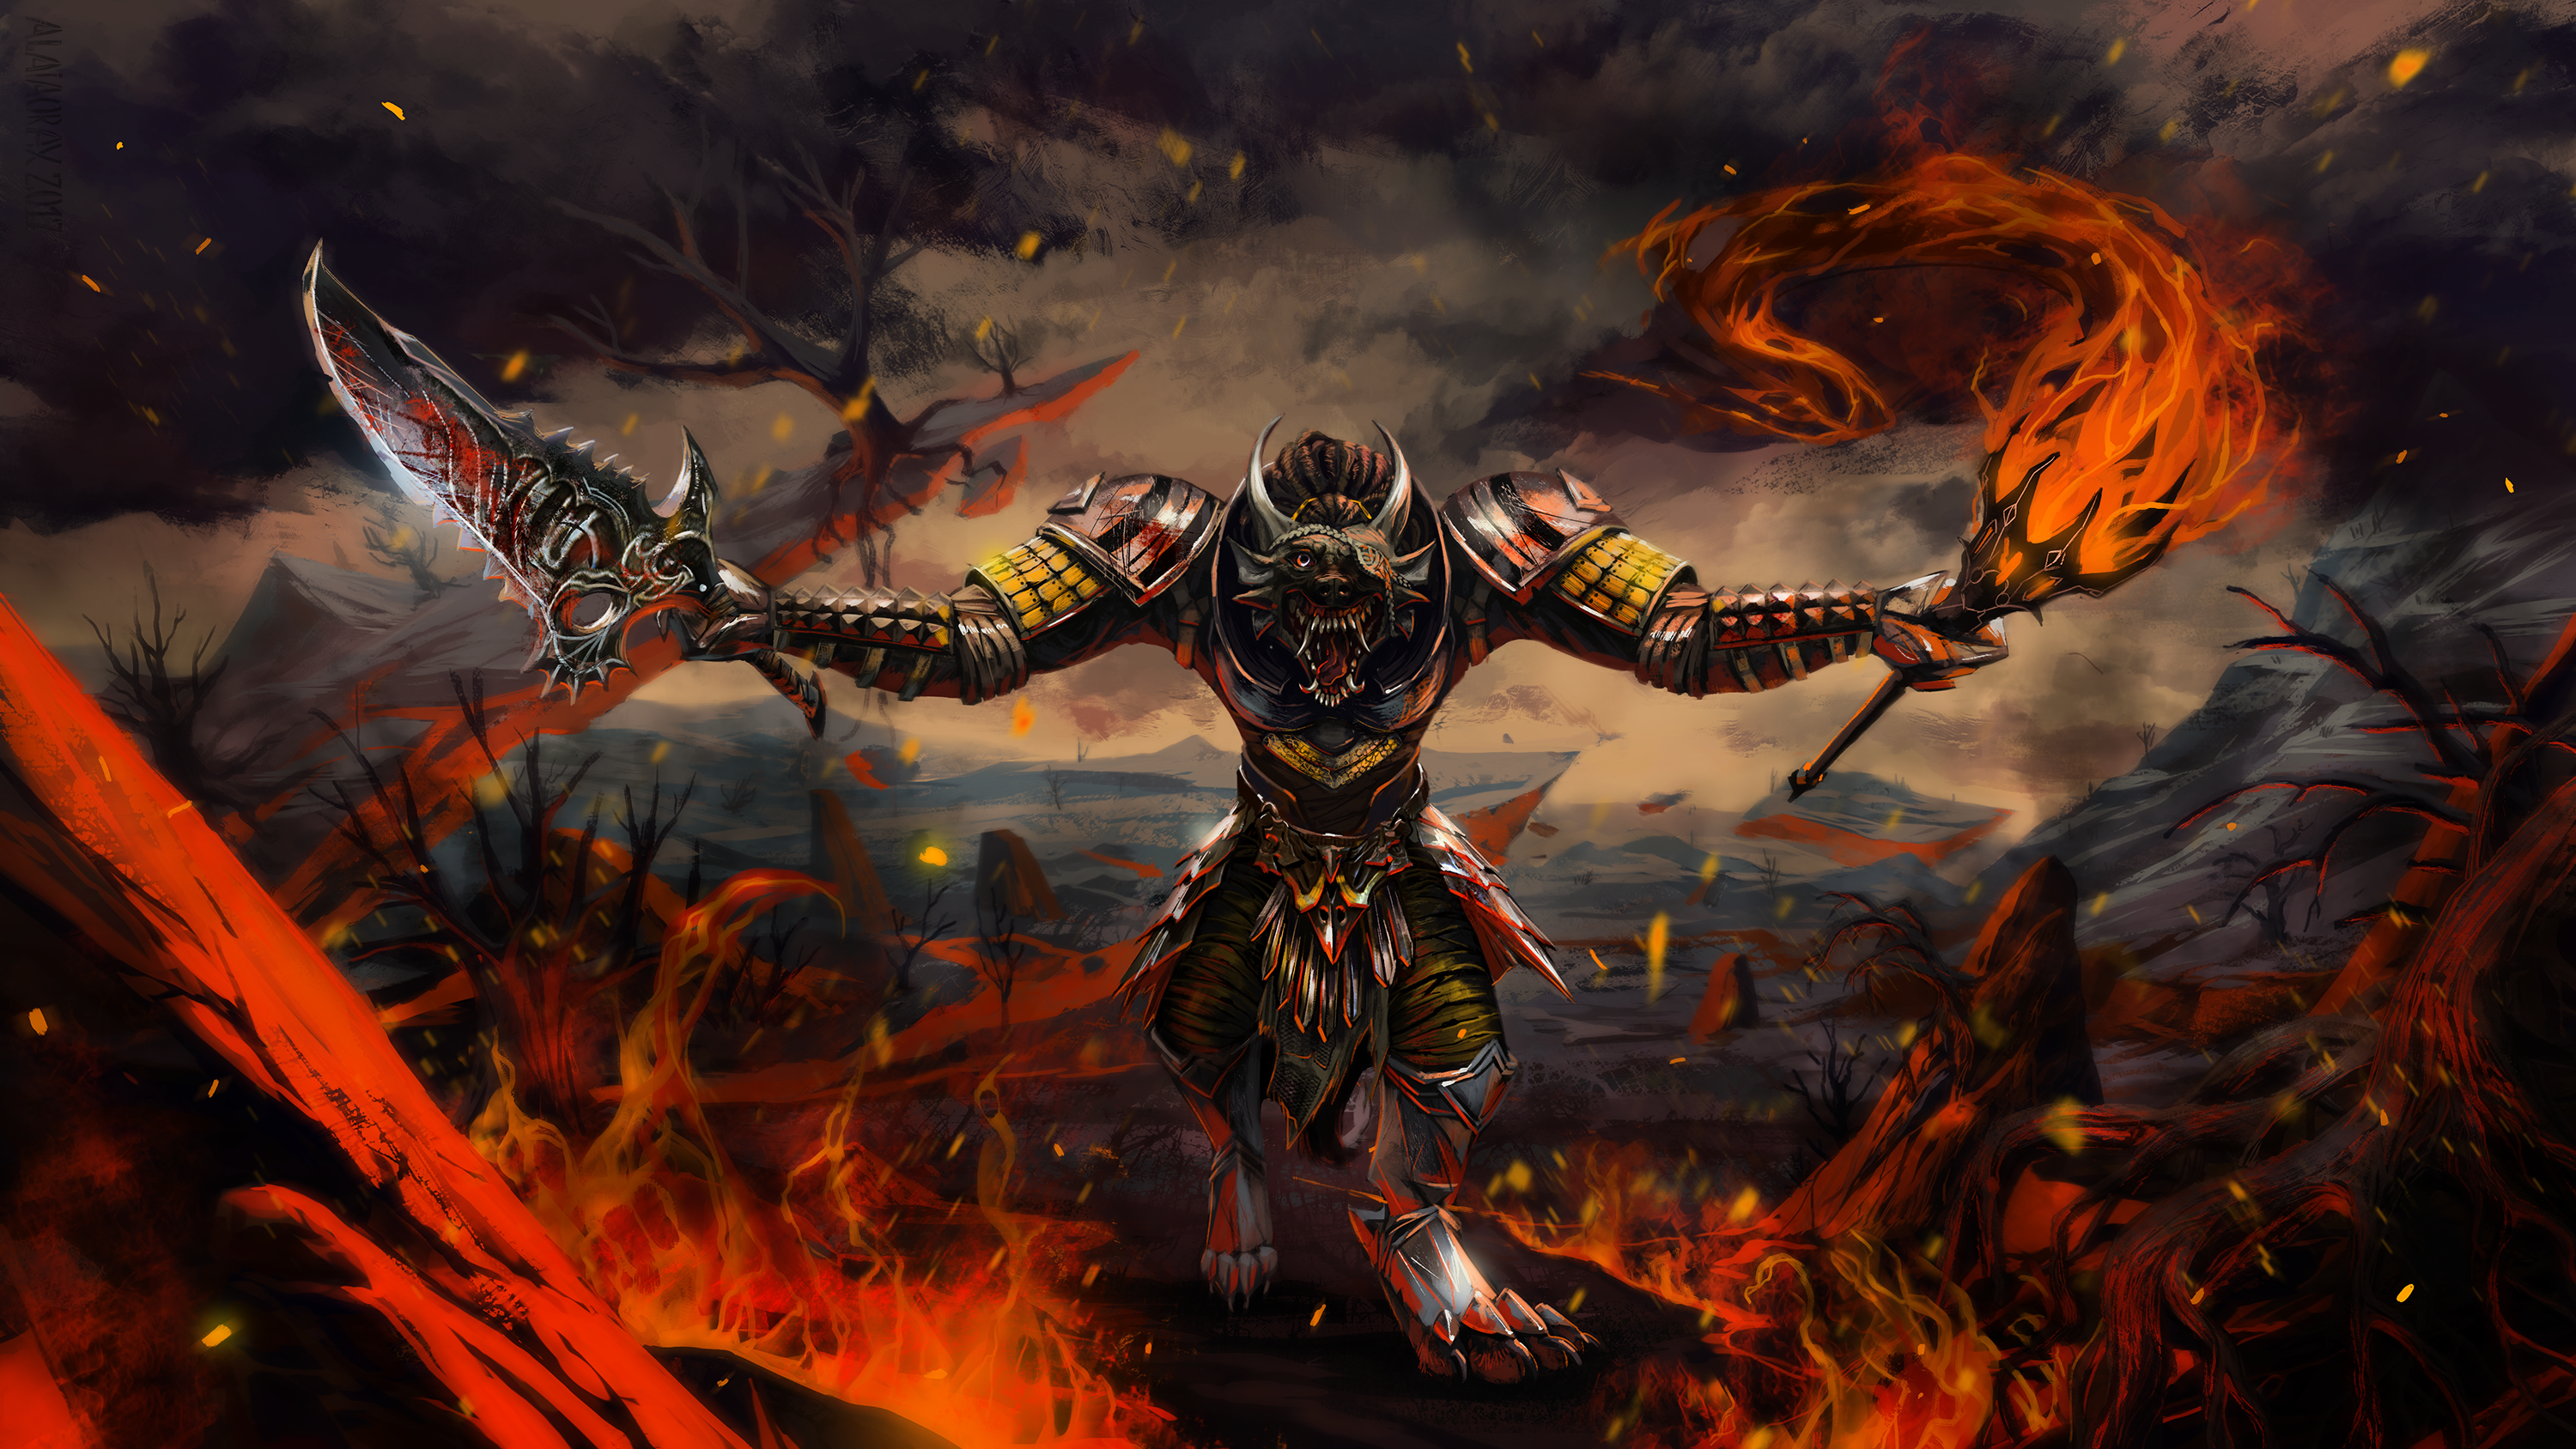 Armor Creature Fire Landscape Sword Torch Warrior 3000x1688